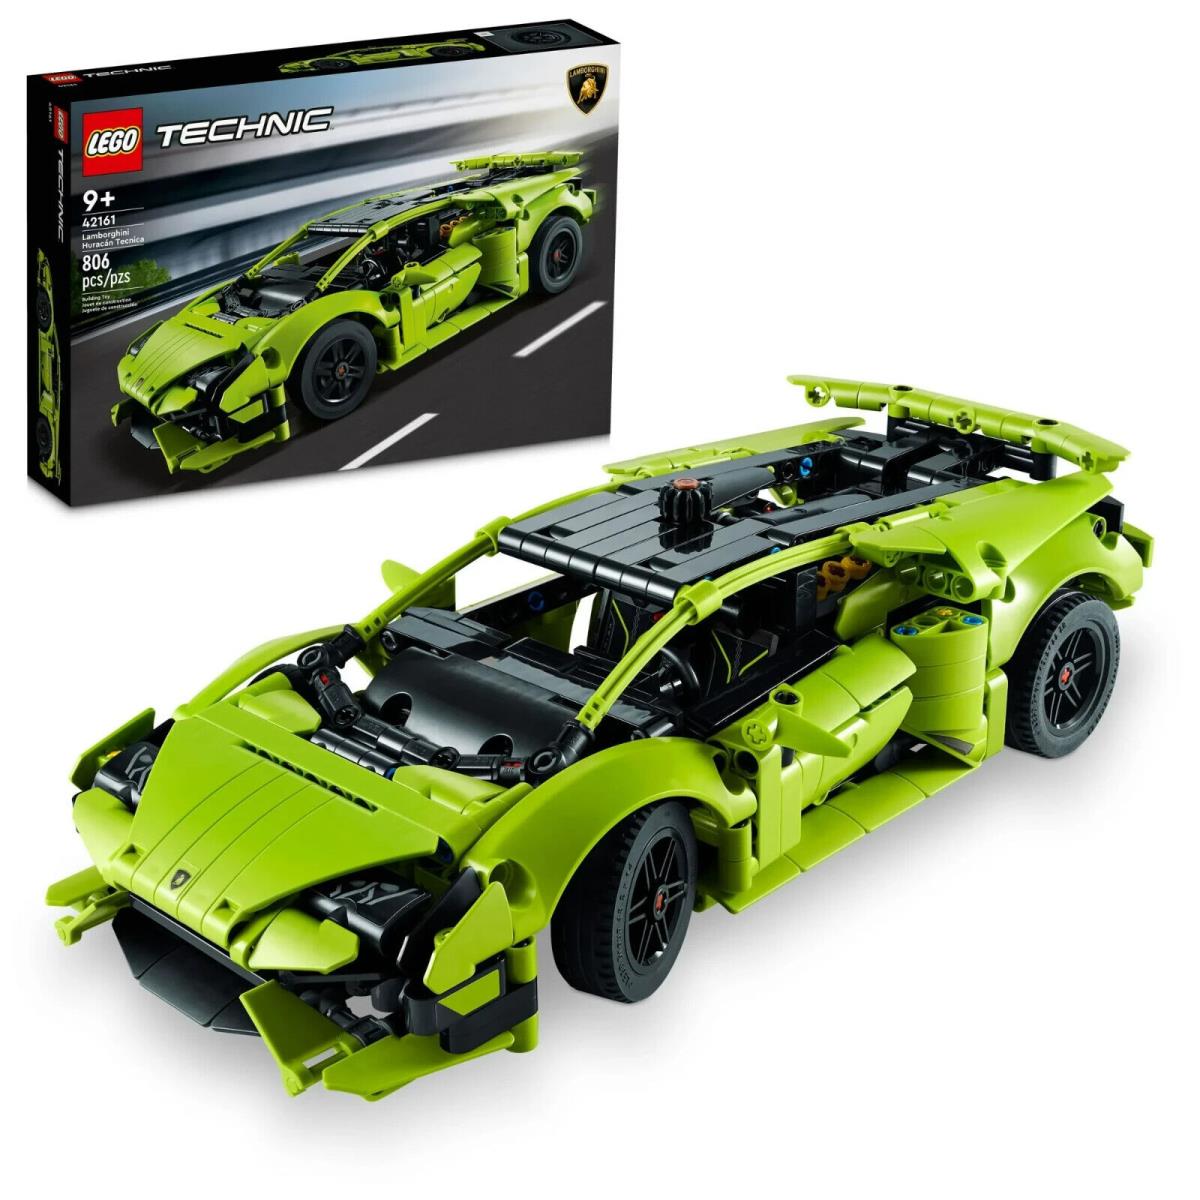 Lego Technic Lamborghini Hurac n Tecnica 42161 Building Set Advanced Sports Car